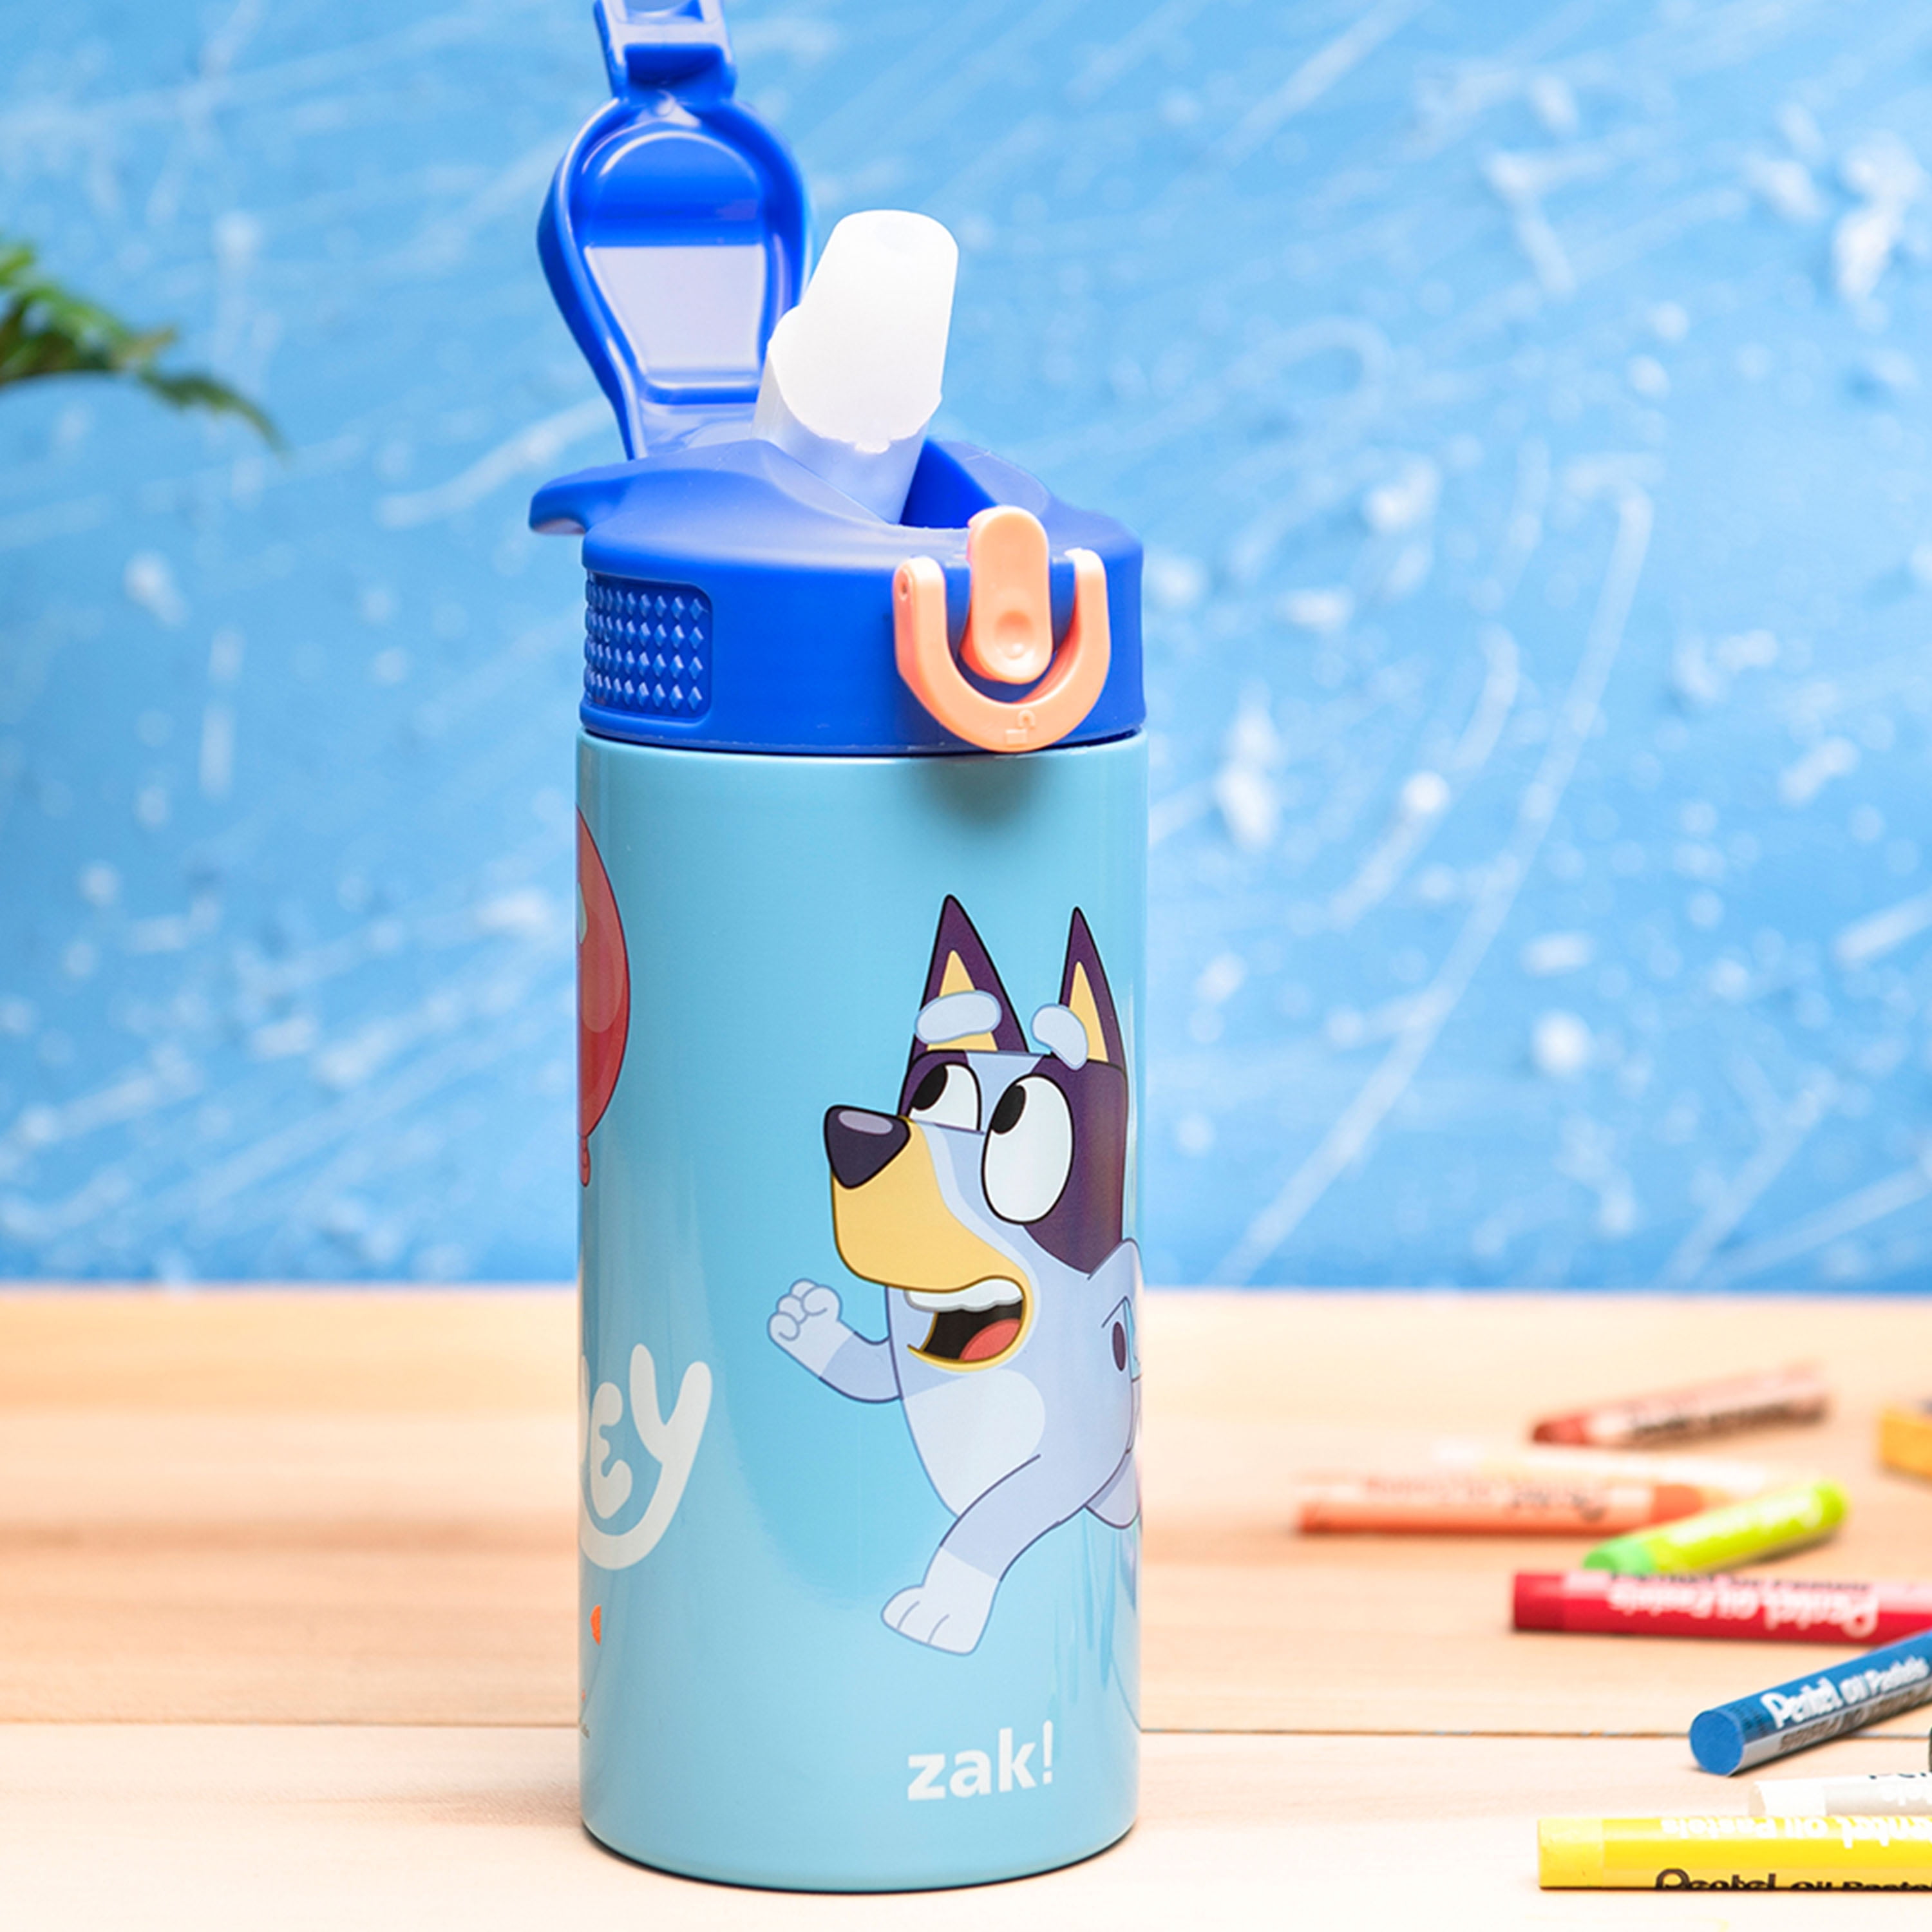 Bluey x Camp Kids’ Water Bottle - Bluey